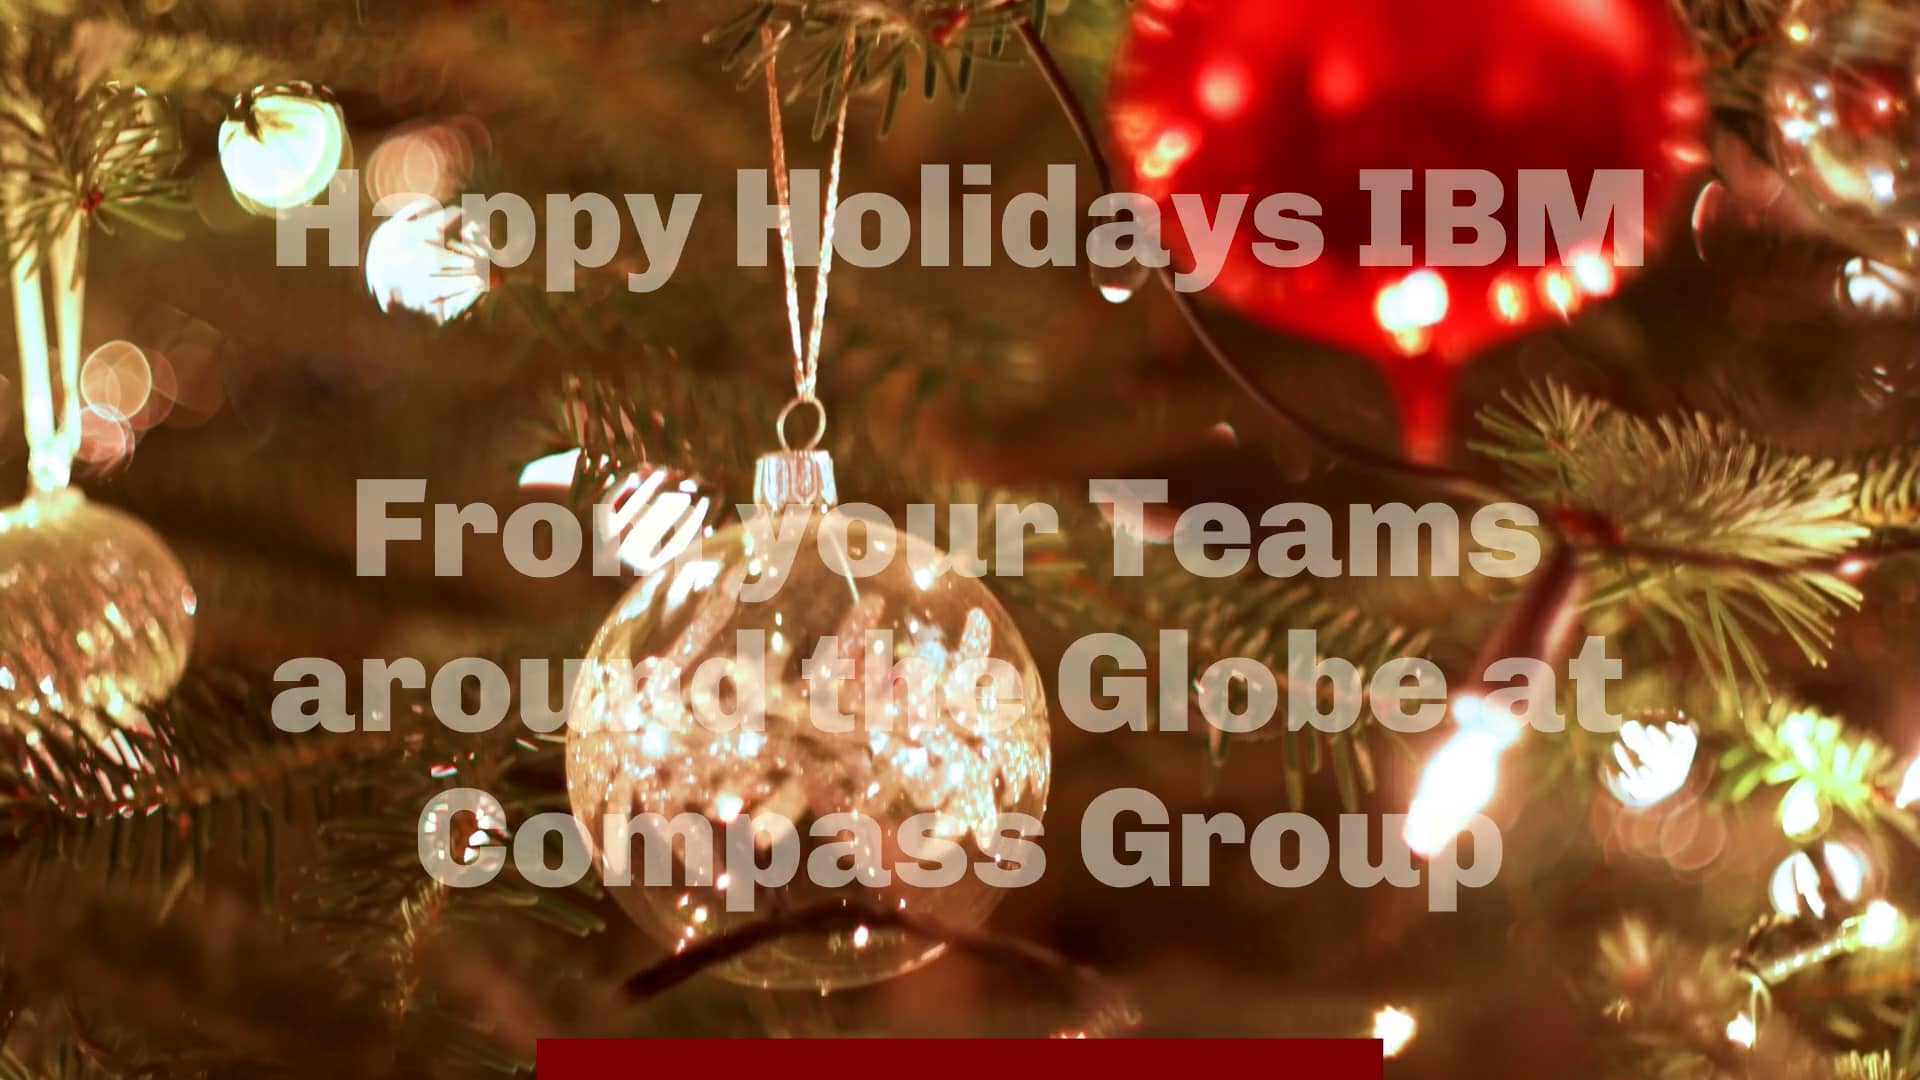 IBM Happy Holidays from around the globe on Vimeo